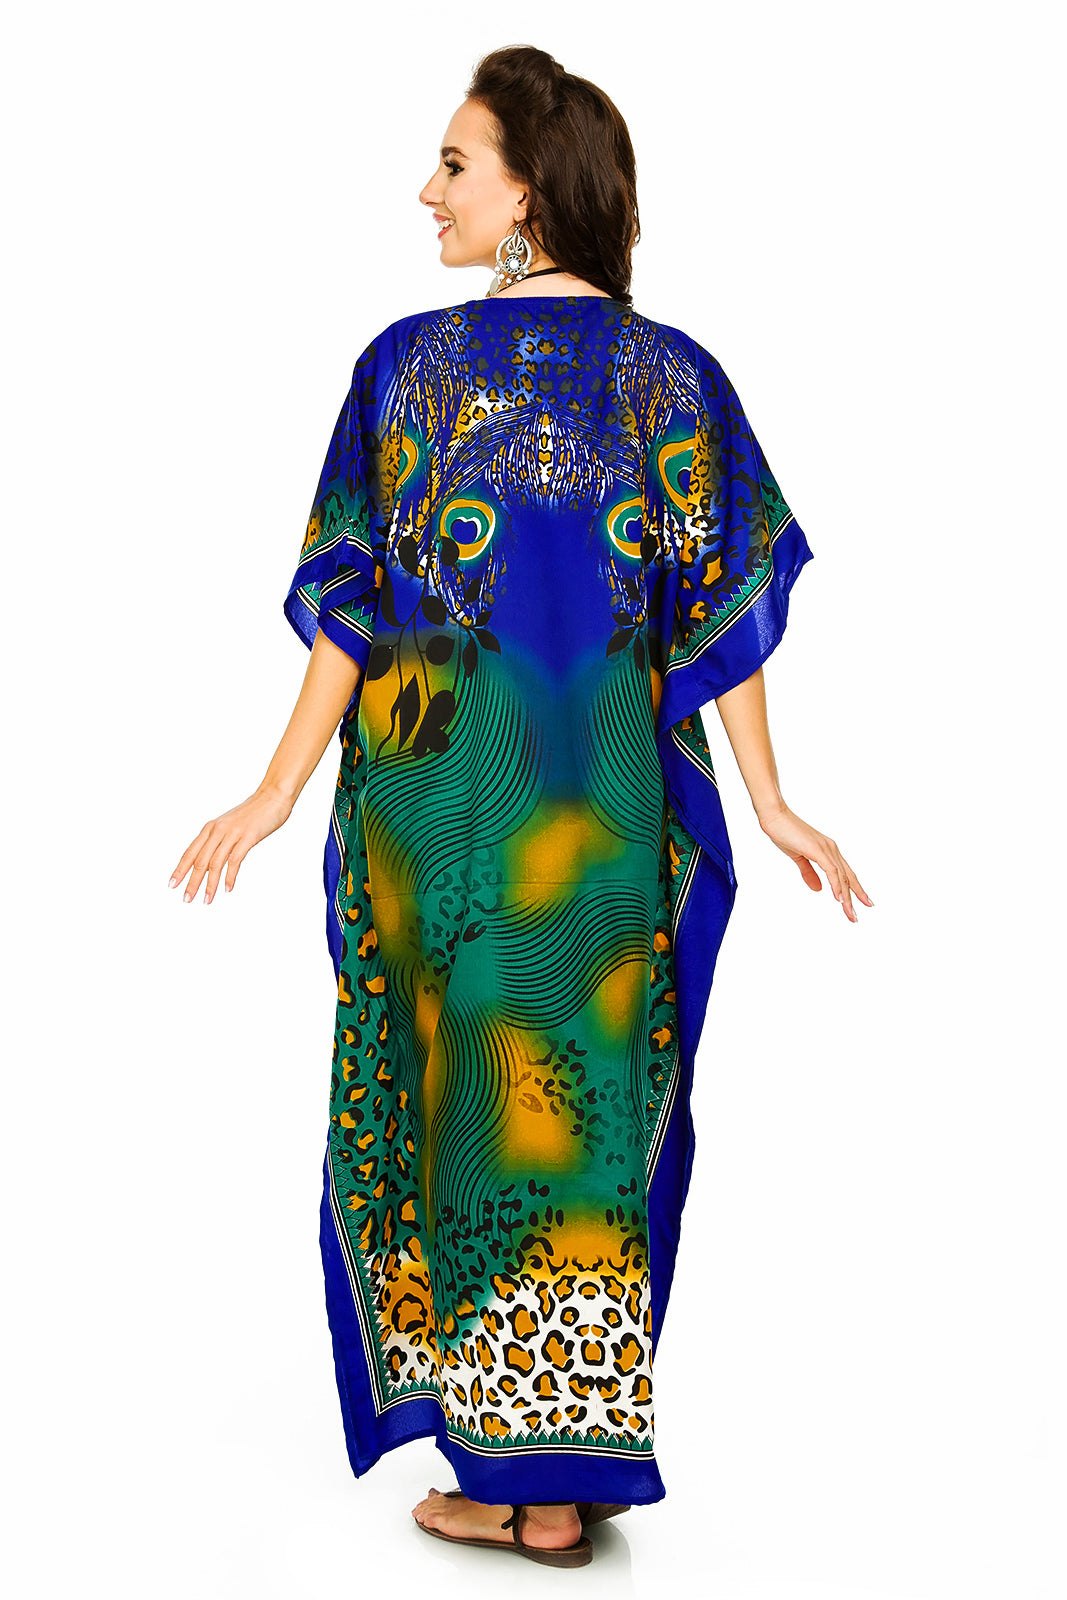 Ladies Full Length Tribal Print Maxi KaftanDress in Blue